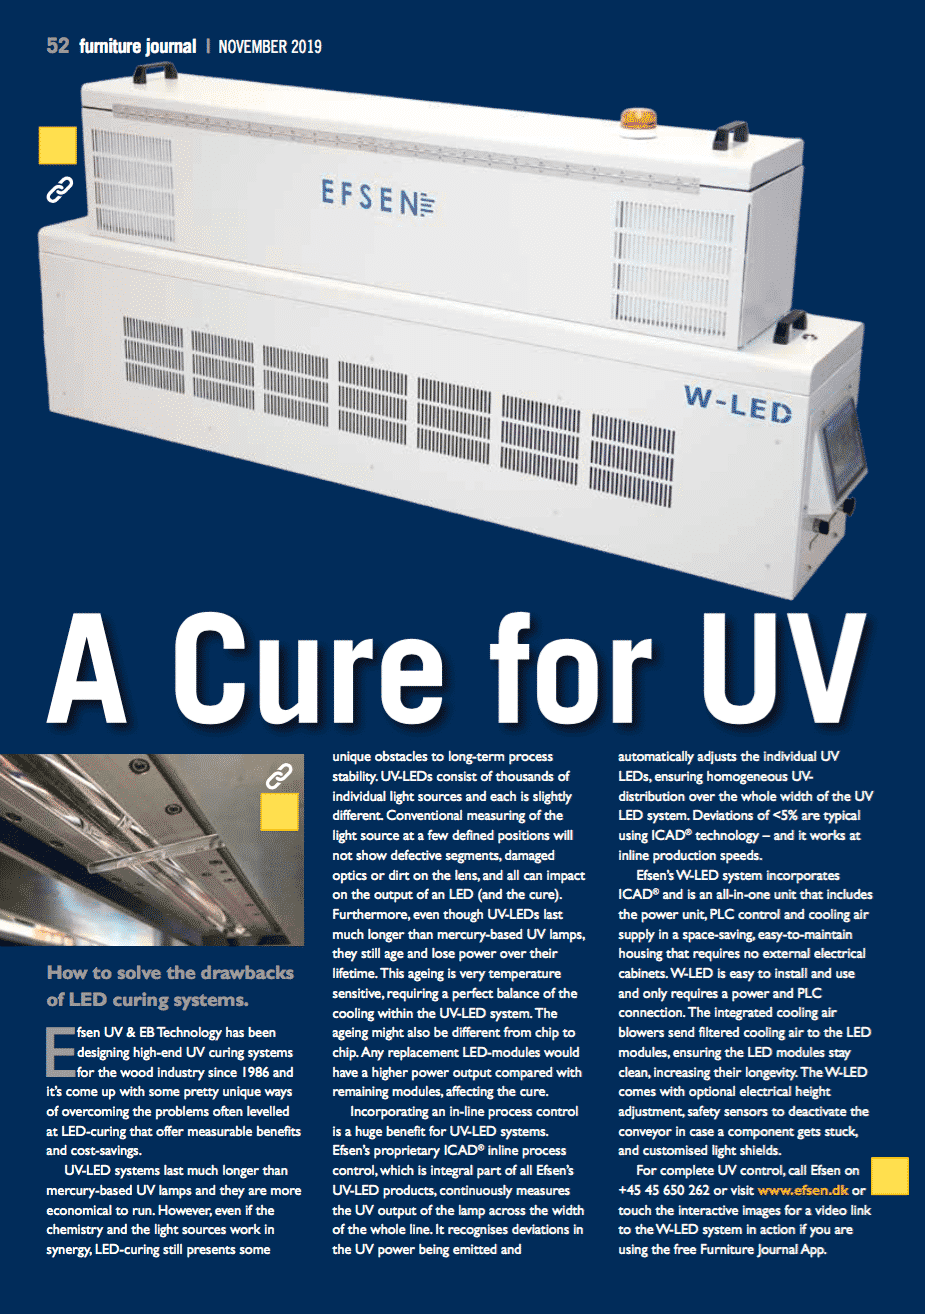 A Cure for UV_Furniture Journal_52_EFSEN UV & EB.jpg